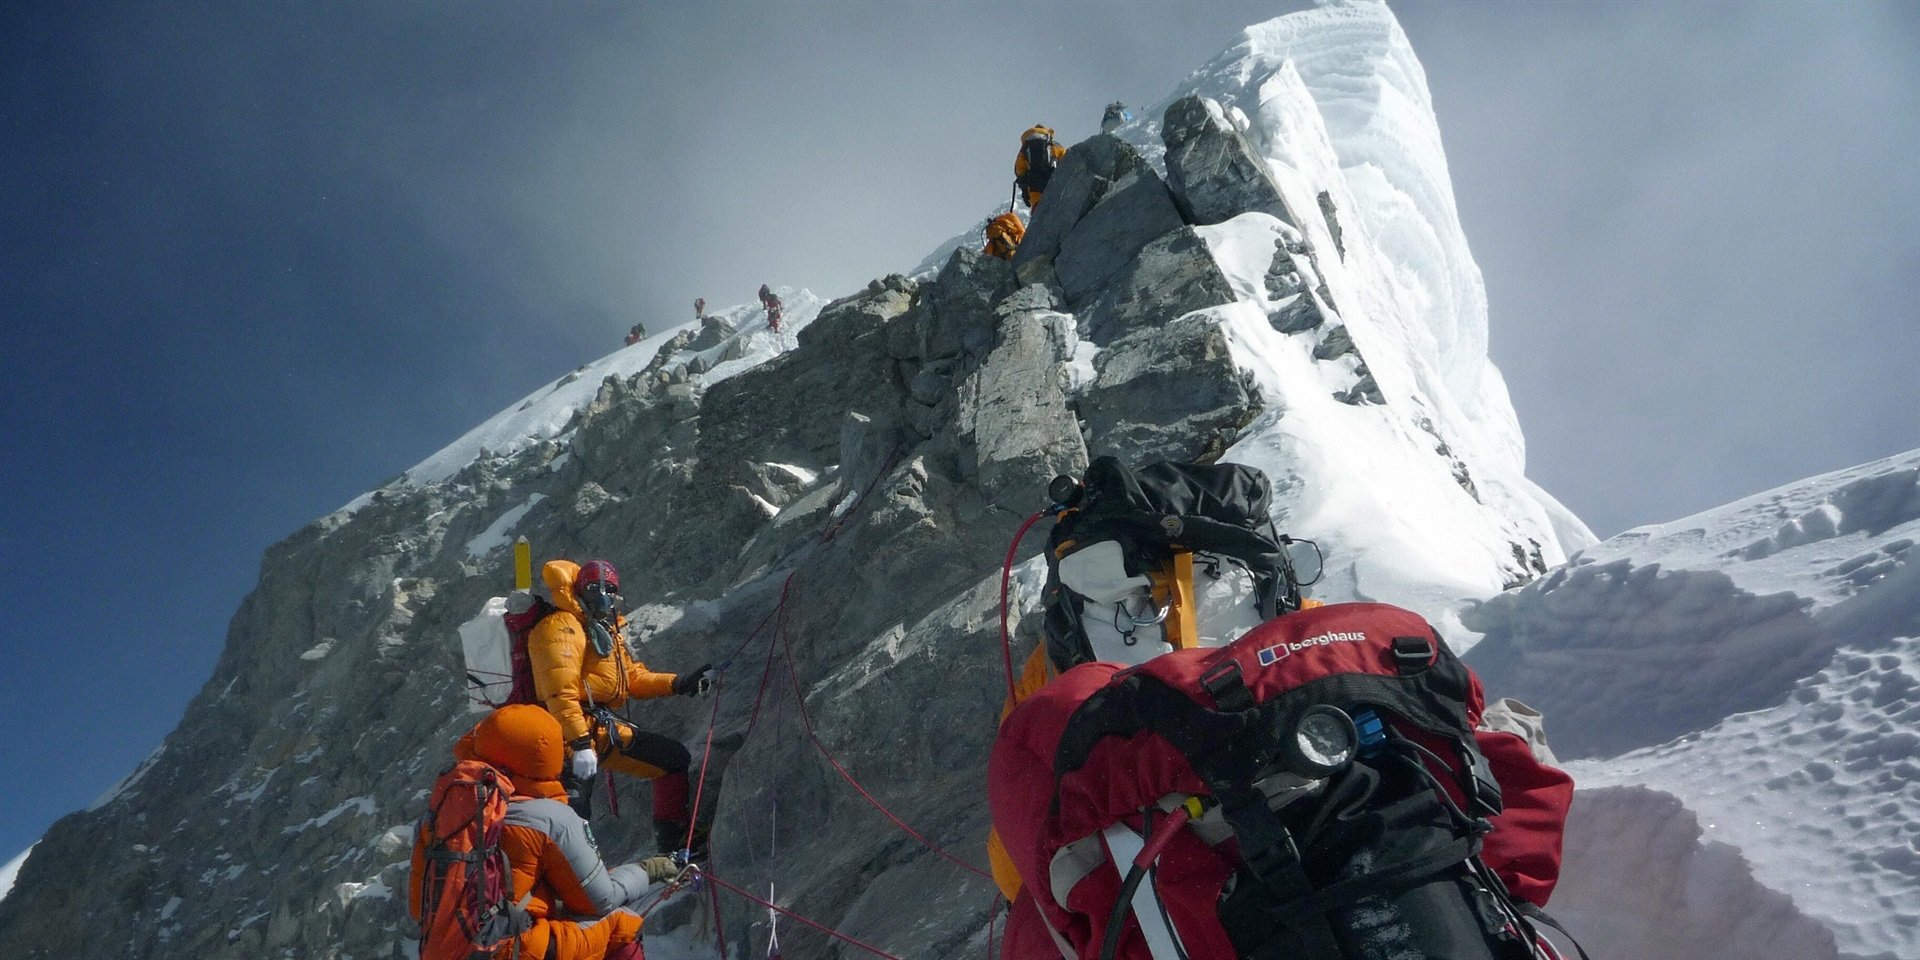 Pasang Dawa Sherpa reached the Everest summit at 8 849 metres on Monday.